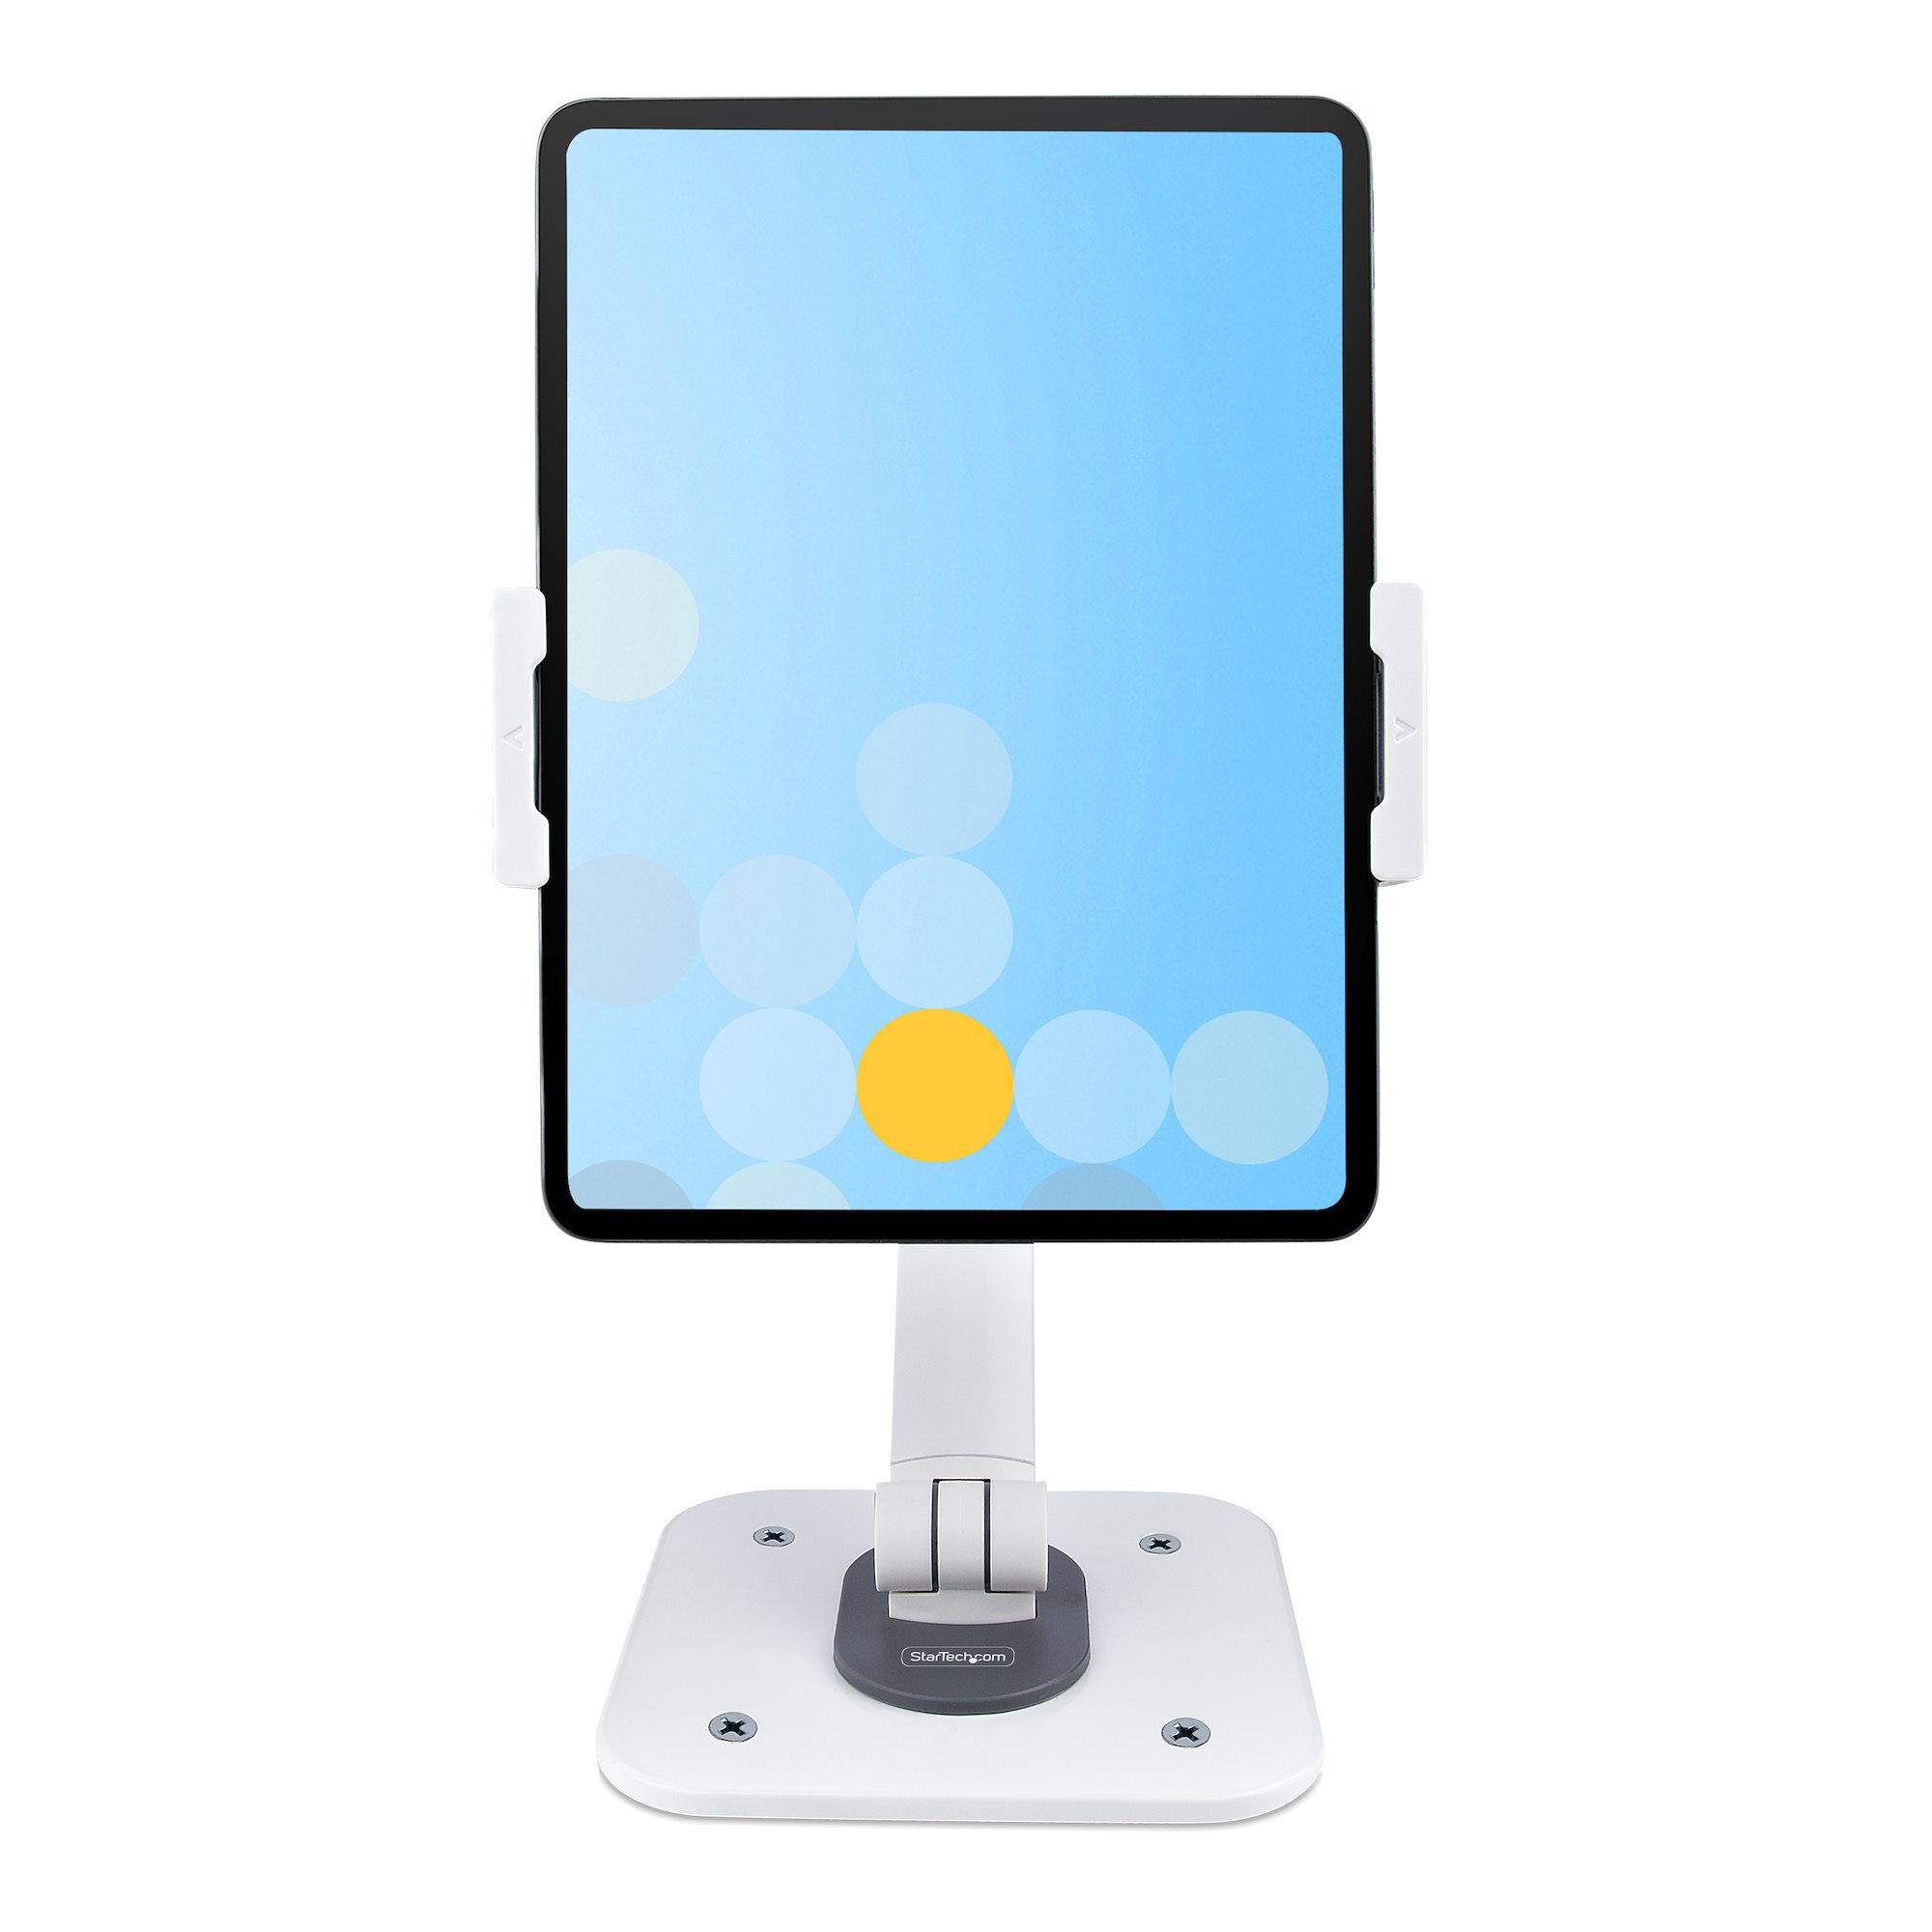 Adjustable Tablet Stand for Desk - Wall Mountable - Capacity 2.2lb (1kg) -  Ergonomic Articulating Universal Tablet Stand - Tablet Holder for Desk